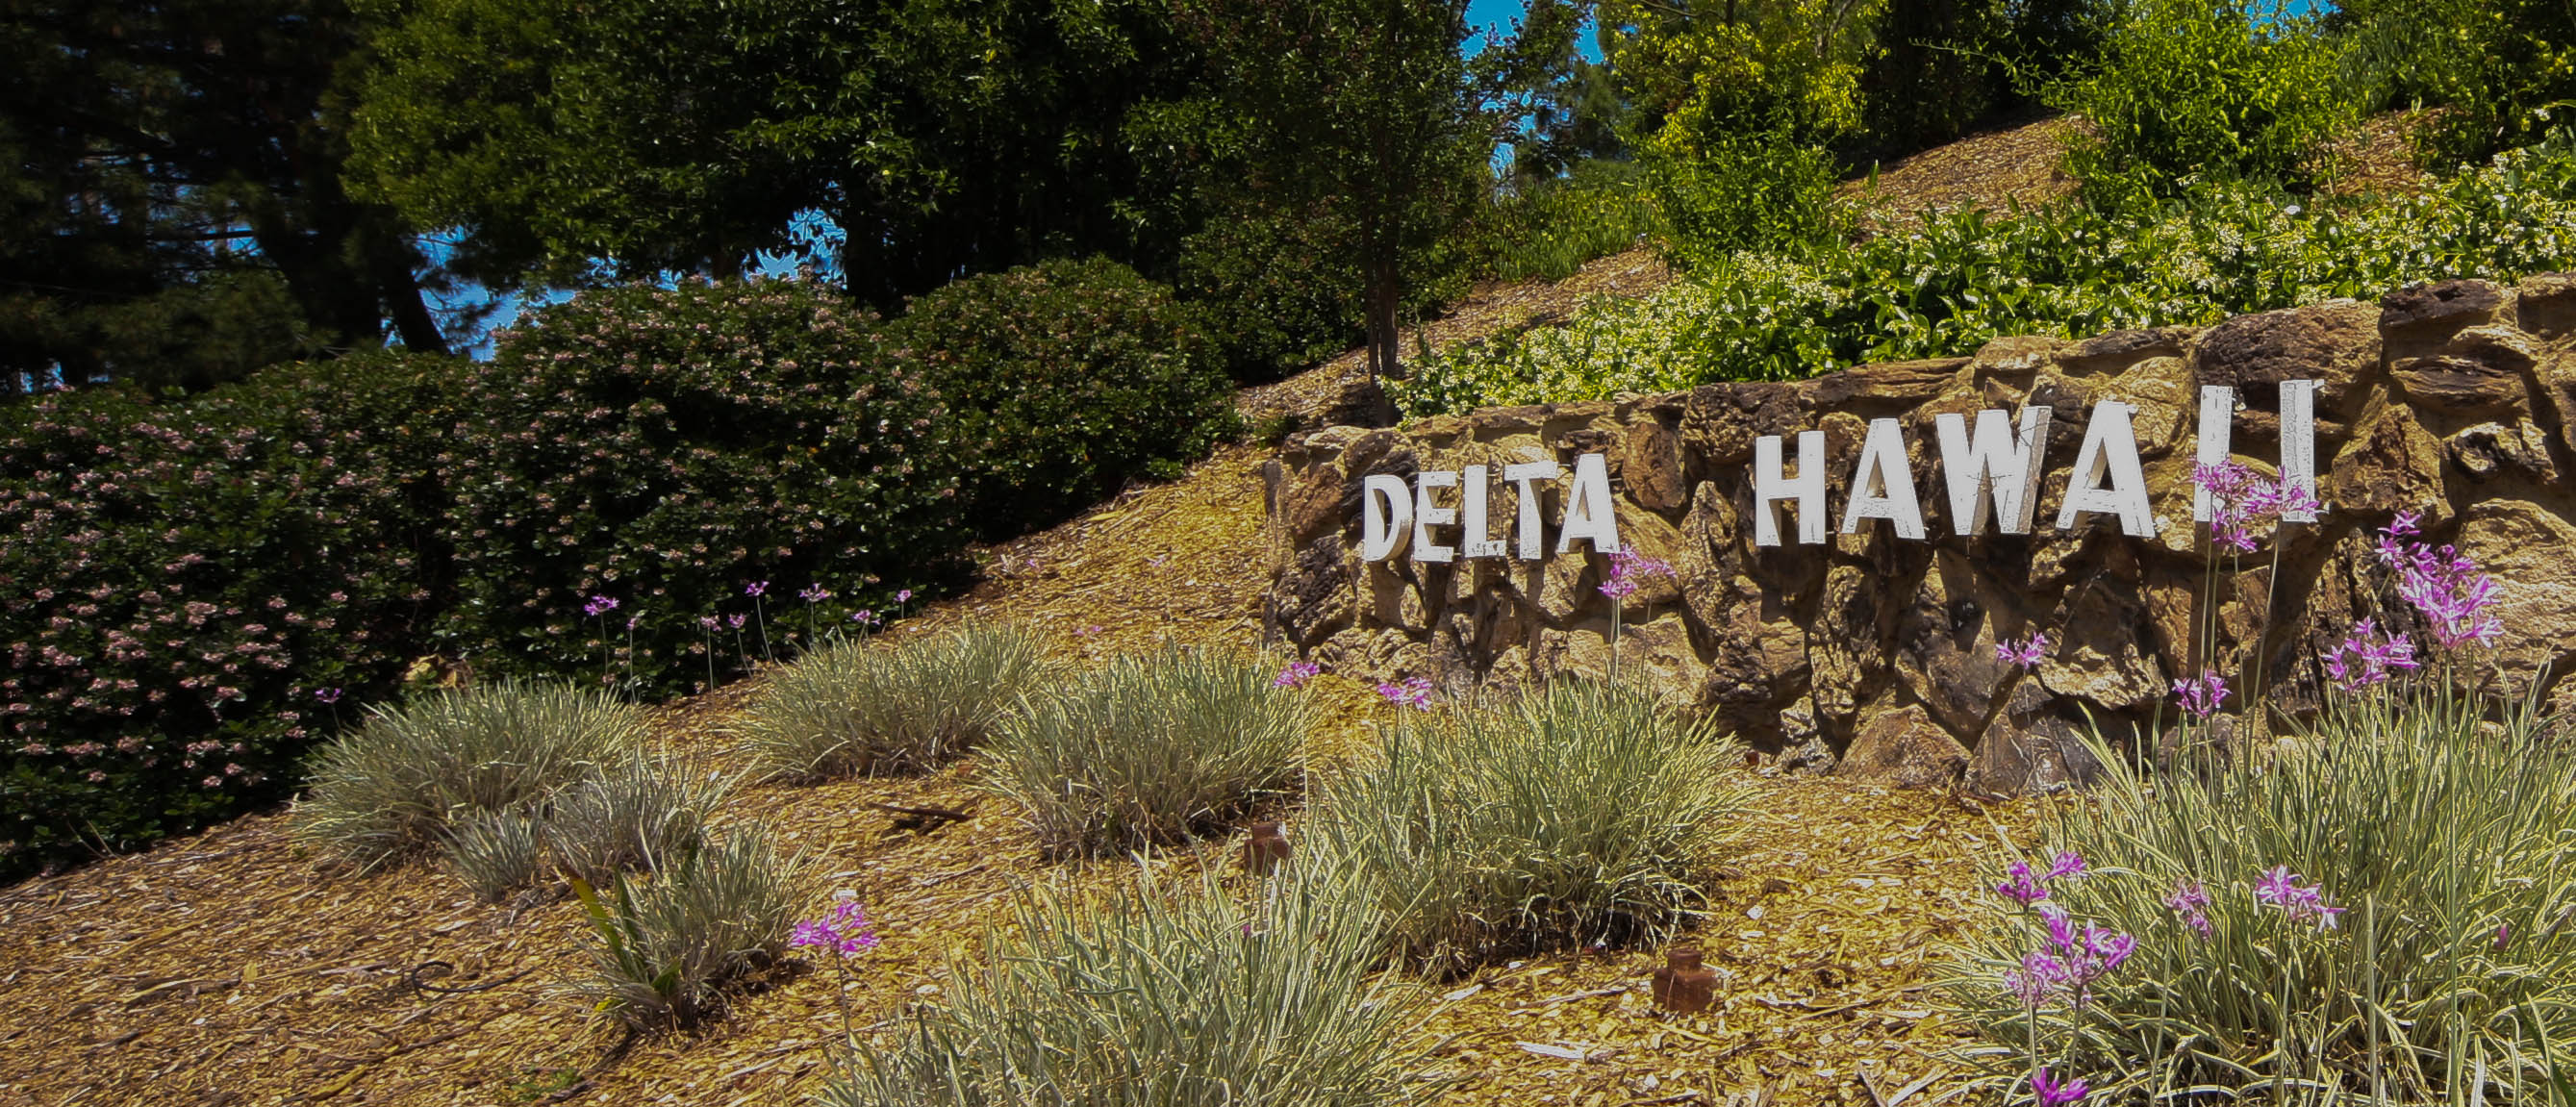 Delta Hawaii Sign